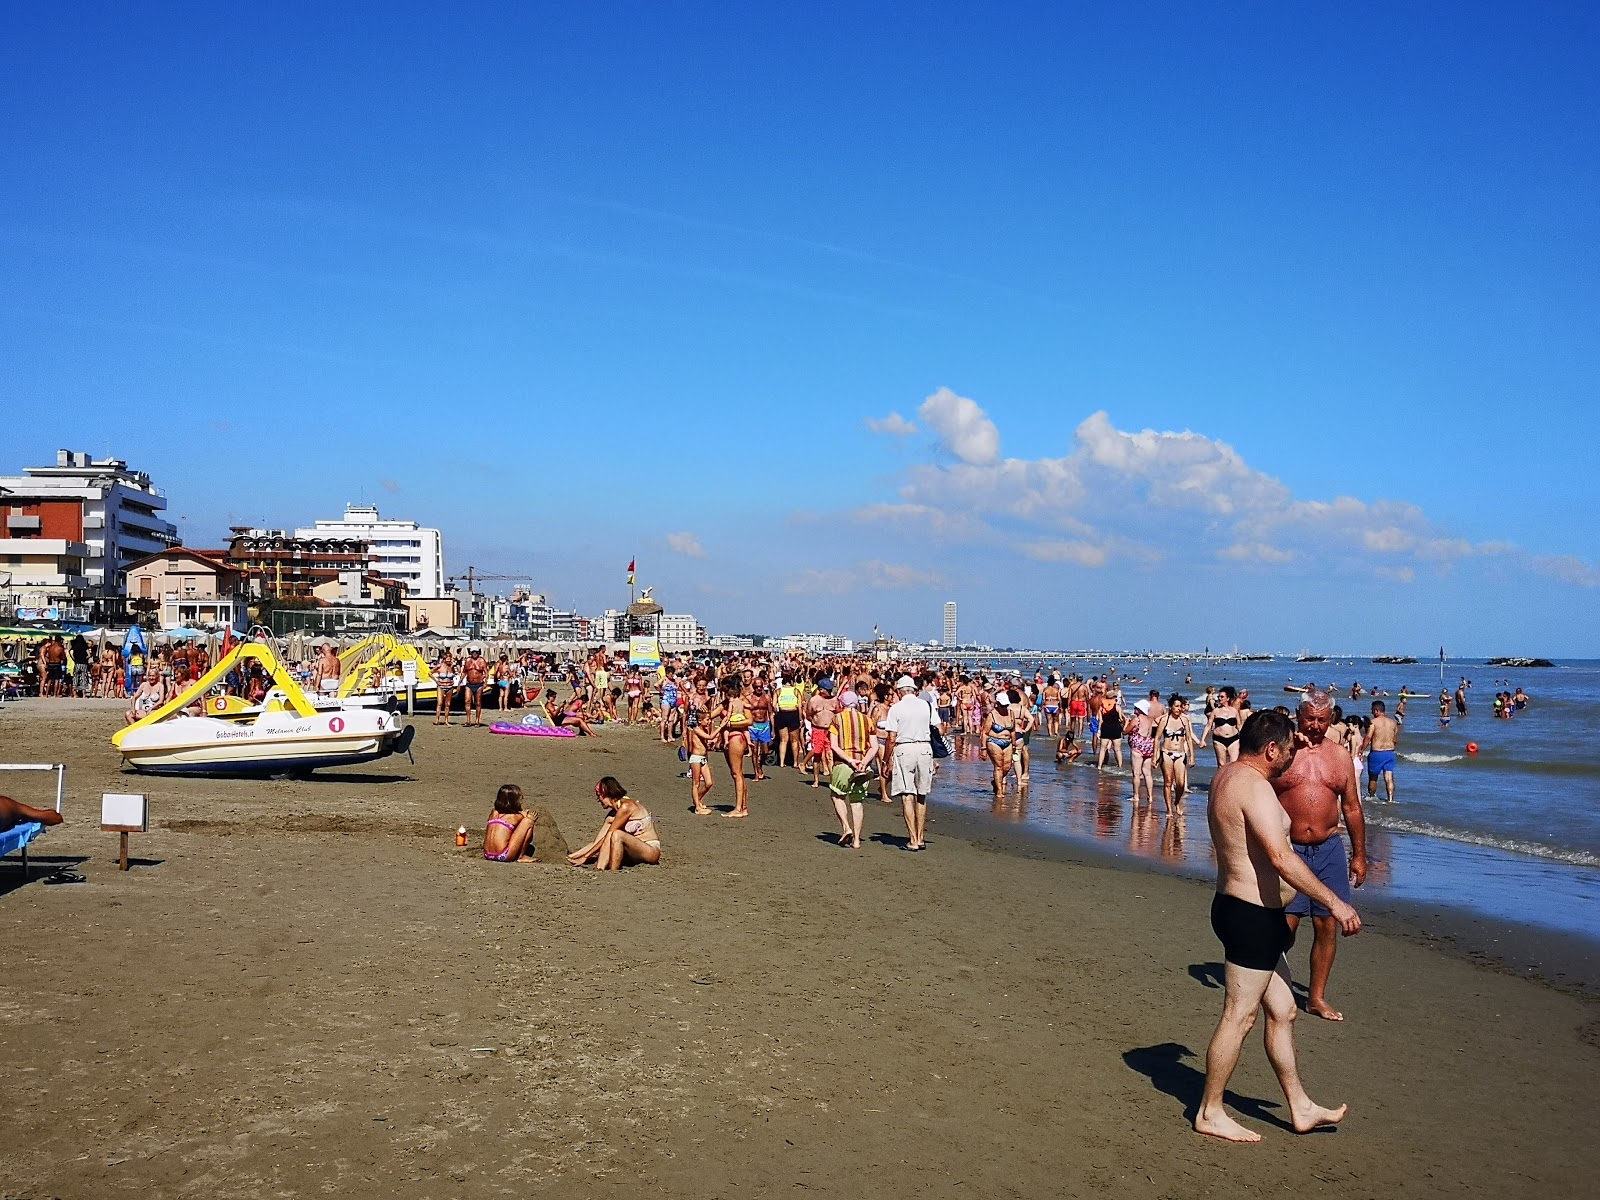 Foto van Spiaggia di Gatteo Mare met hoog niveau van netheid